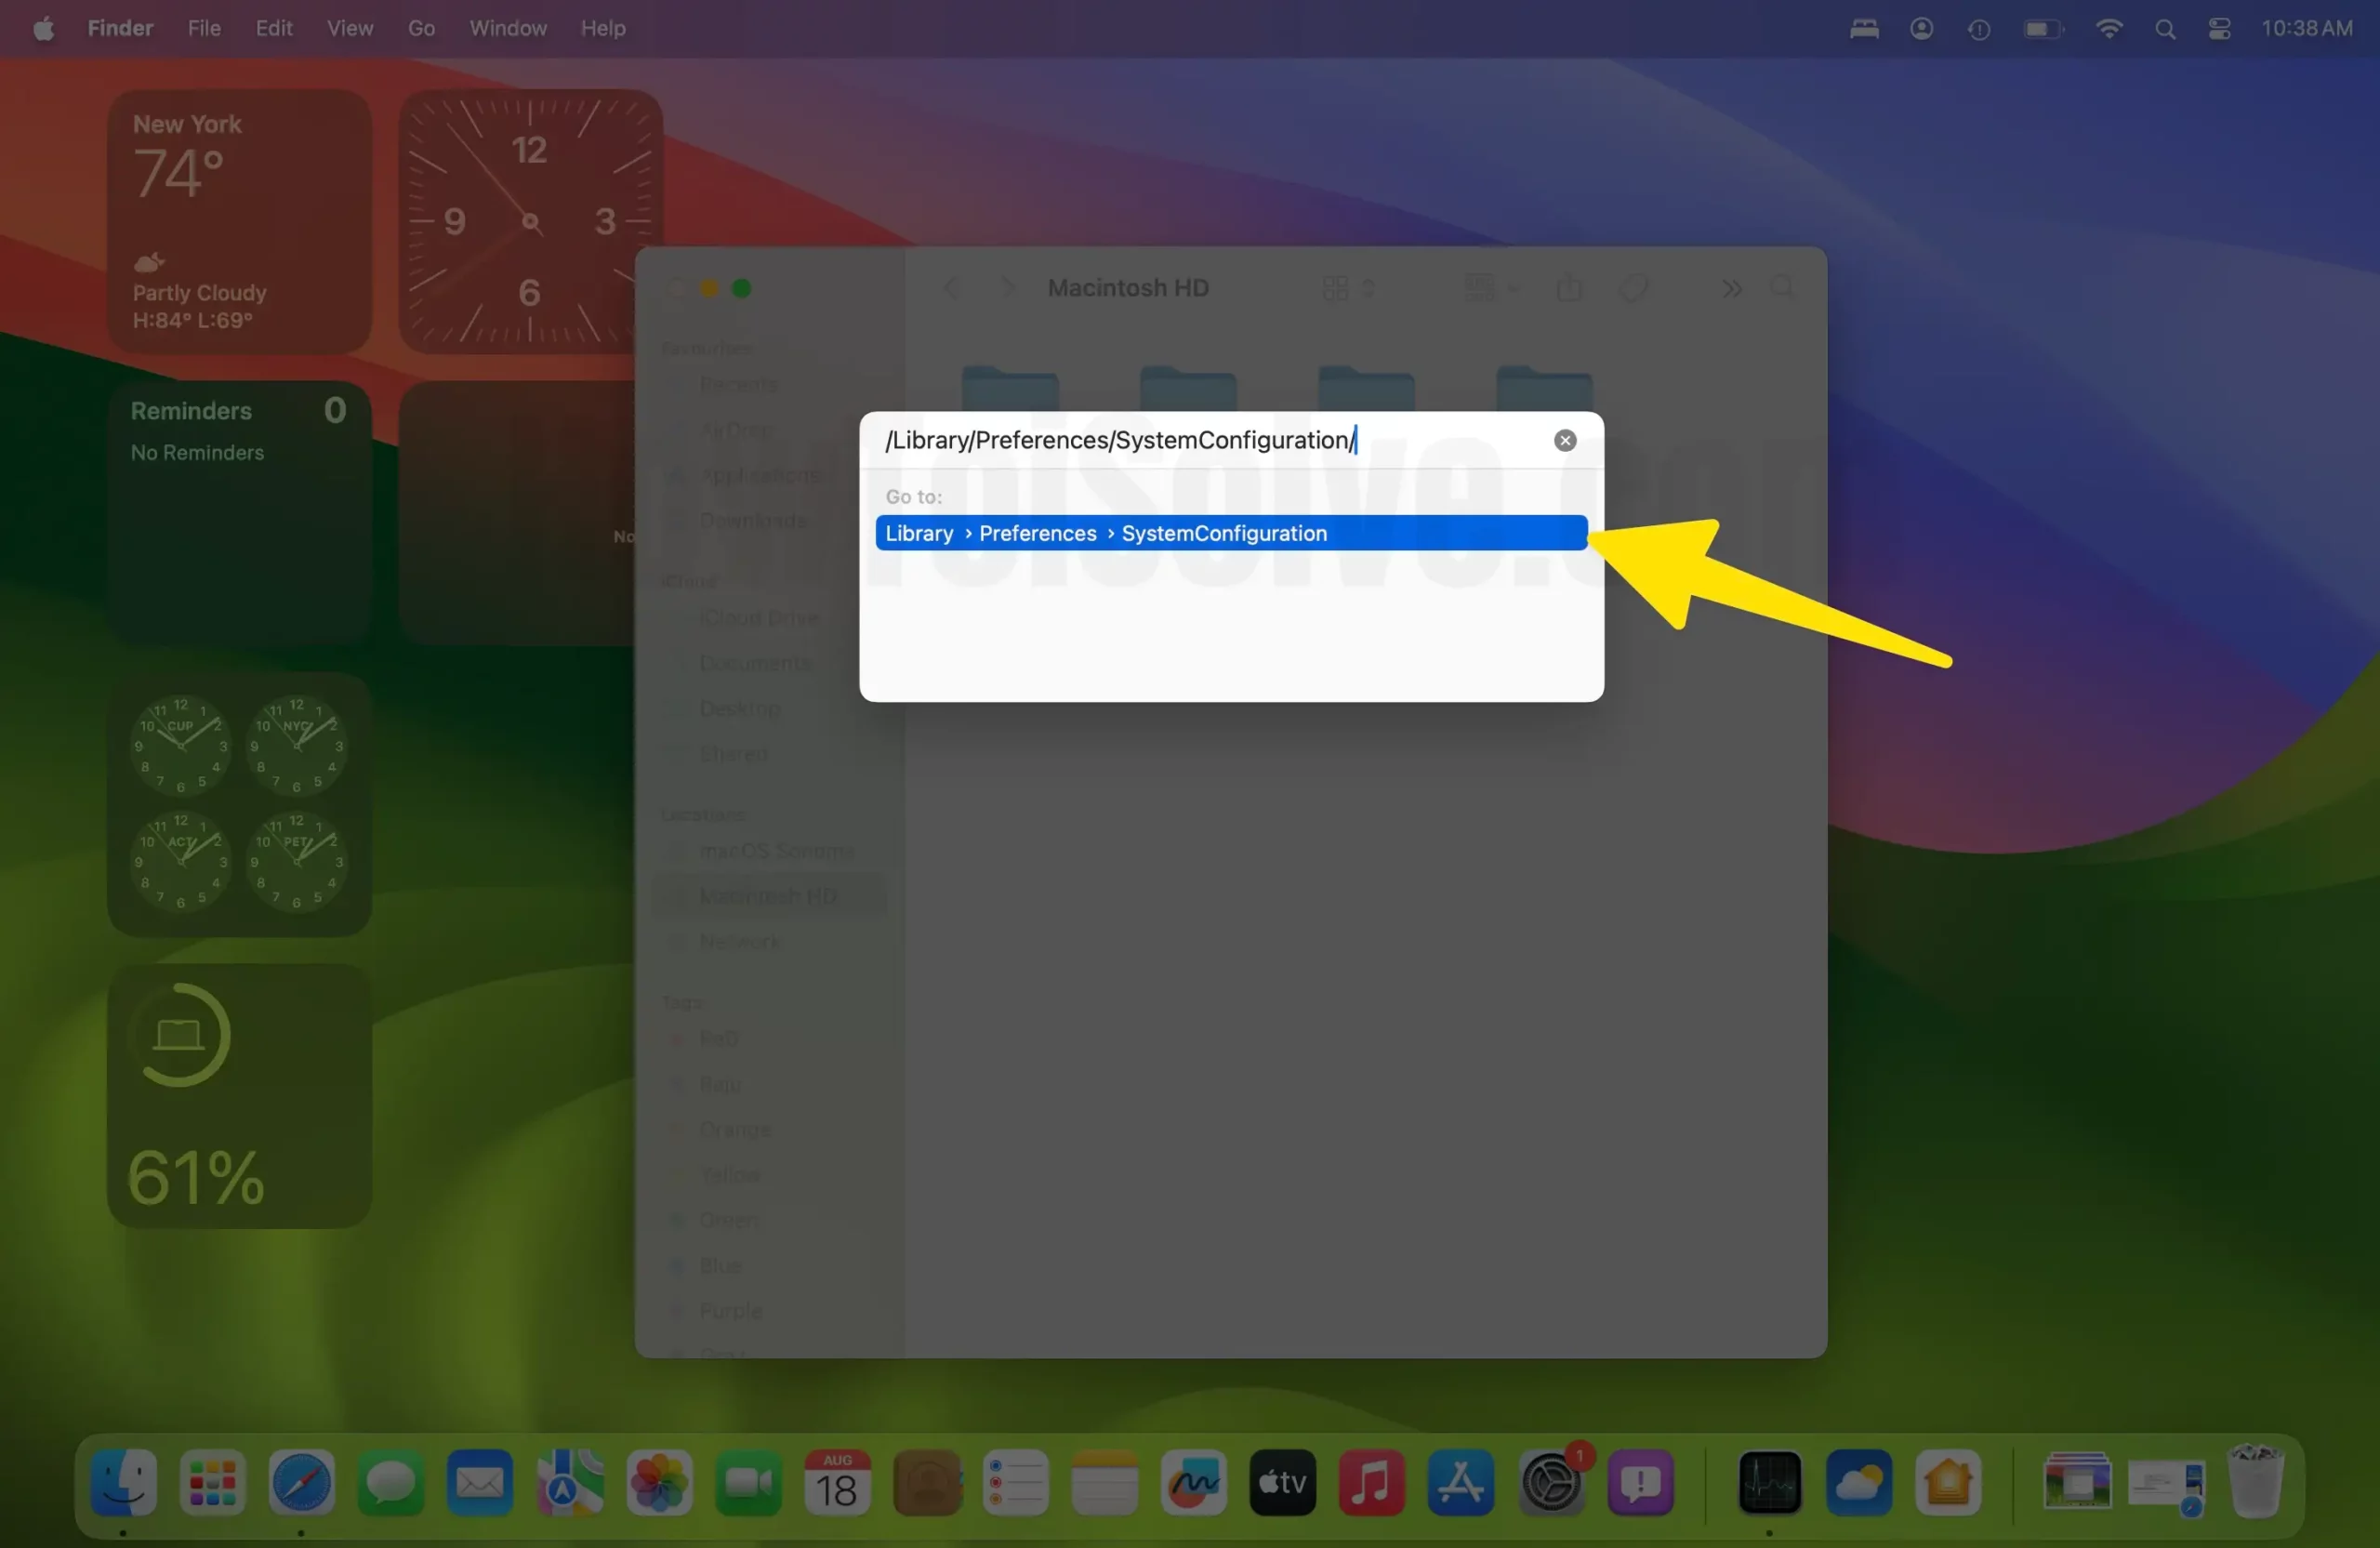 Open System Configuration Folder on Mac